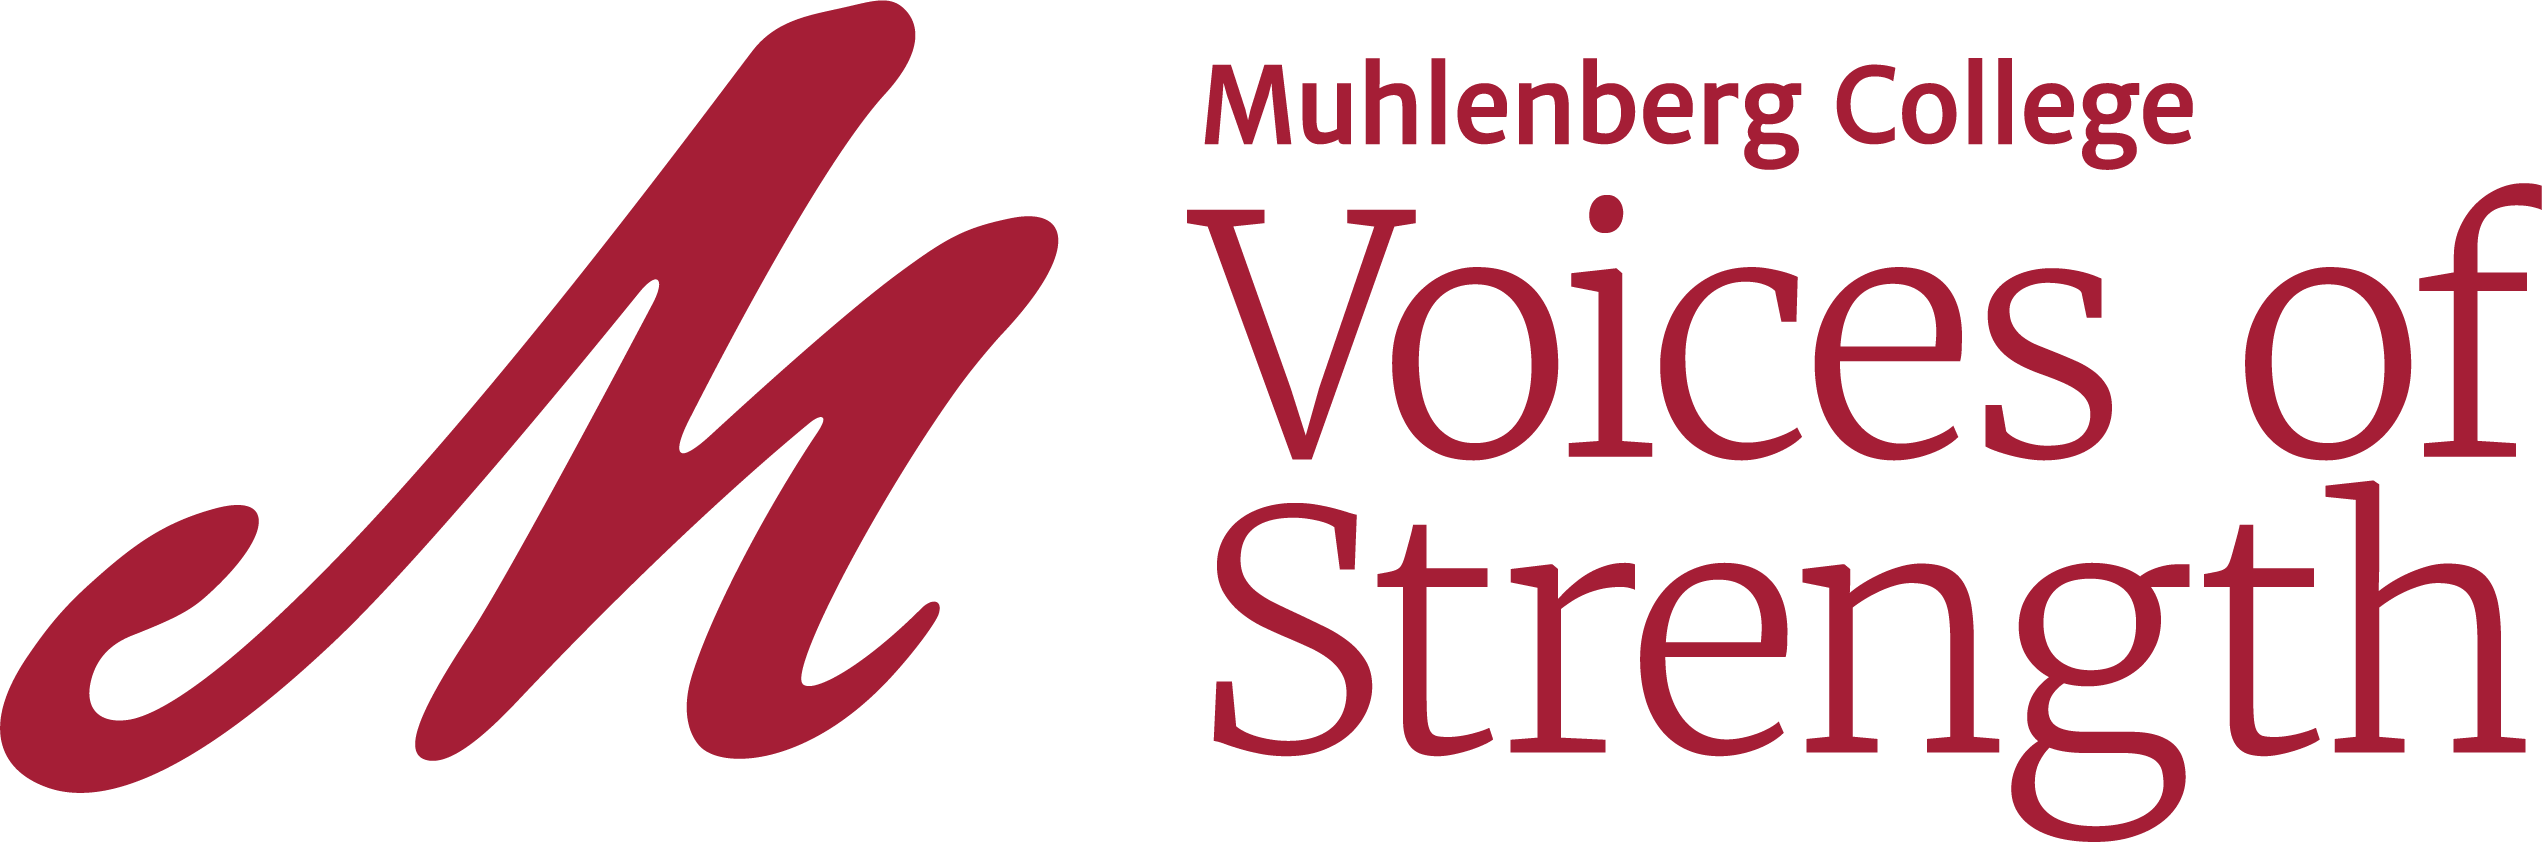 Muhlenberg school or department logo